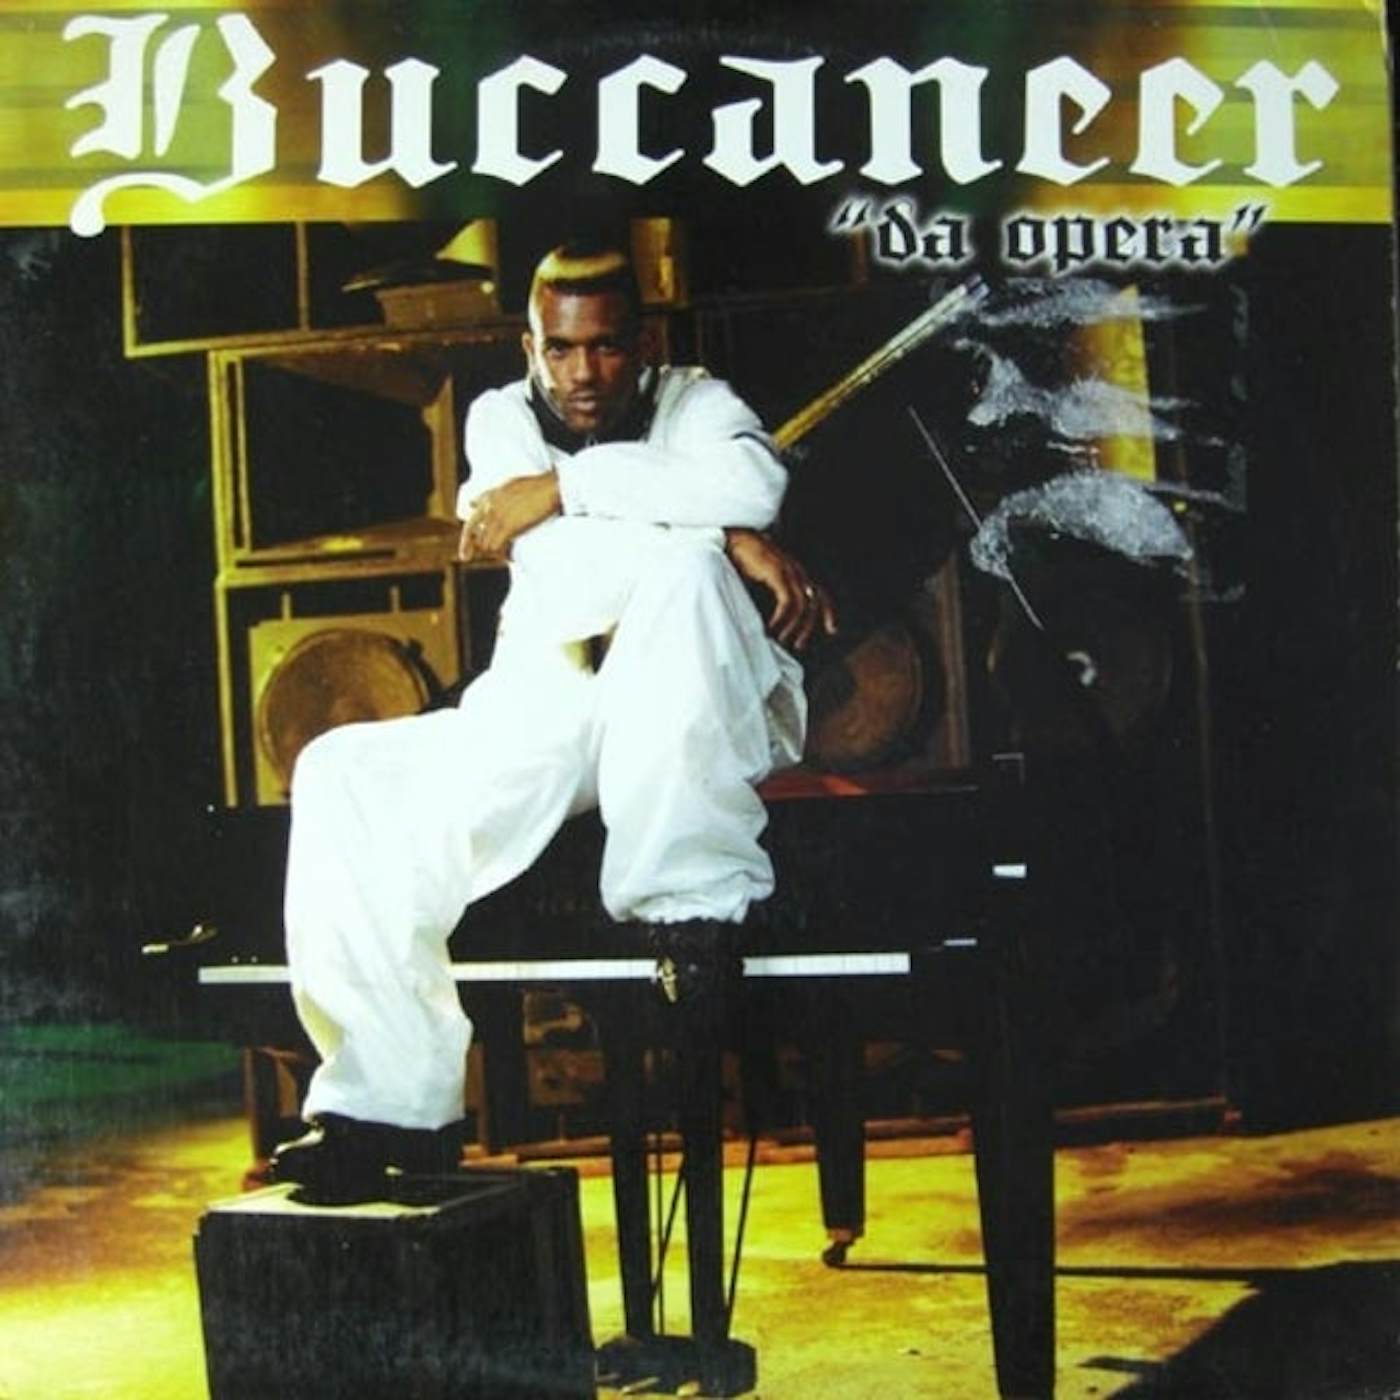 Buccaneer DA OPERA Vinyl Record